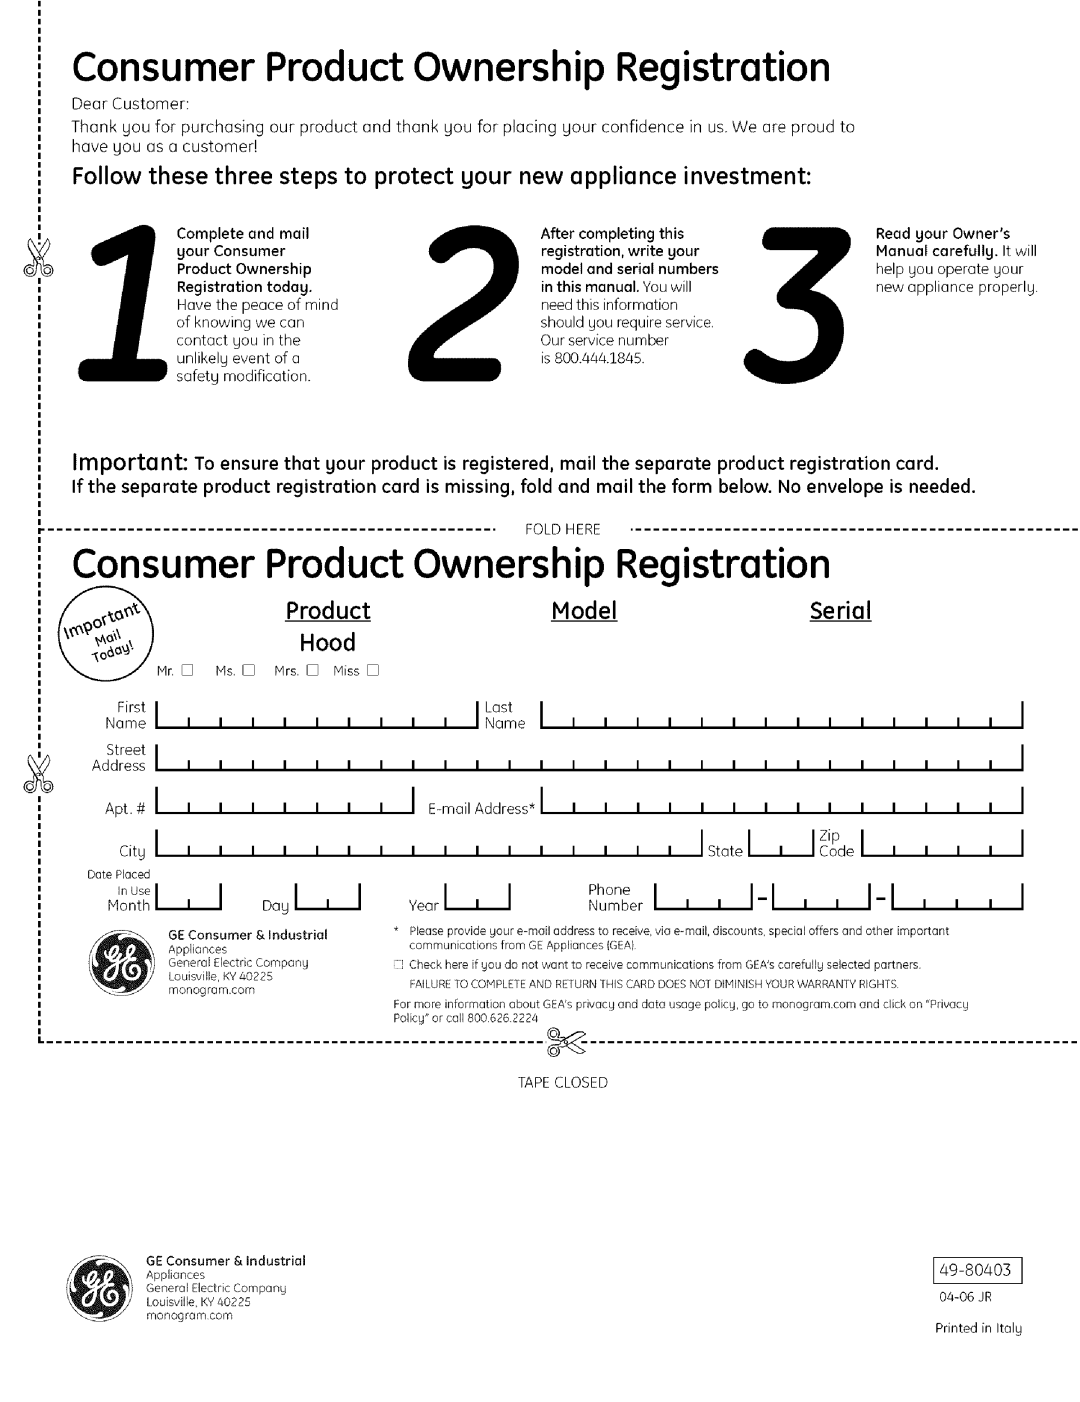 GE ZV925 owner manual Consumer Product Ownership Registration, II p, Model, Serial, Hood, 49-80403I 